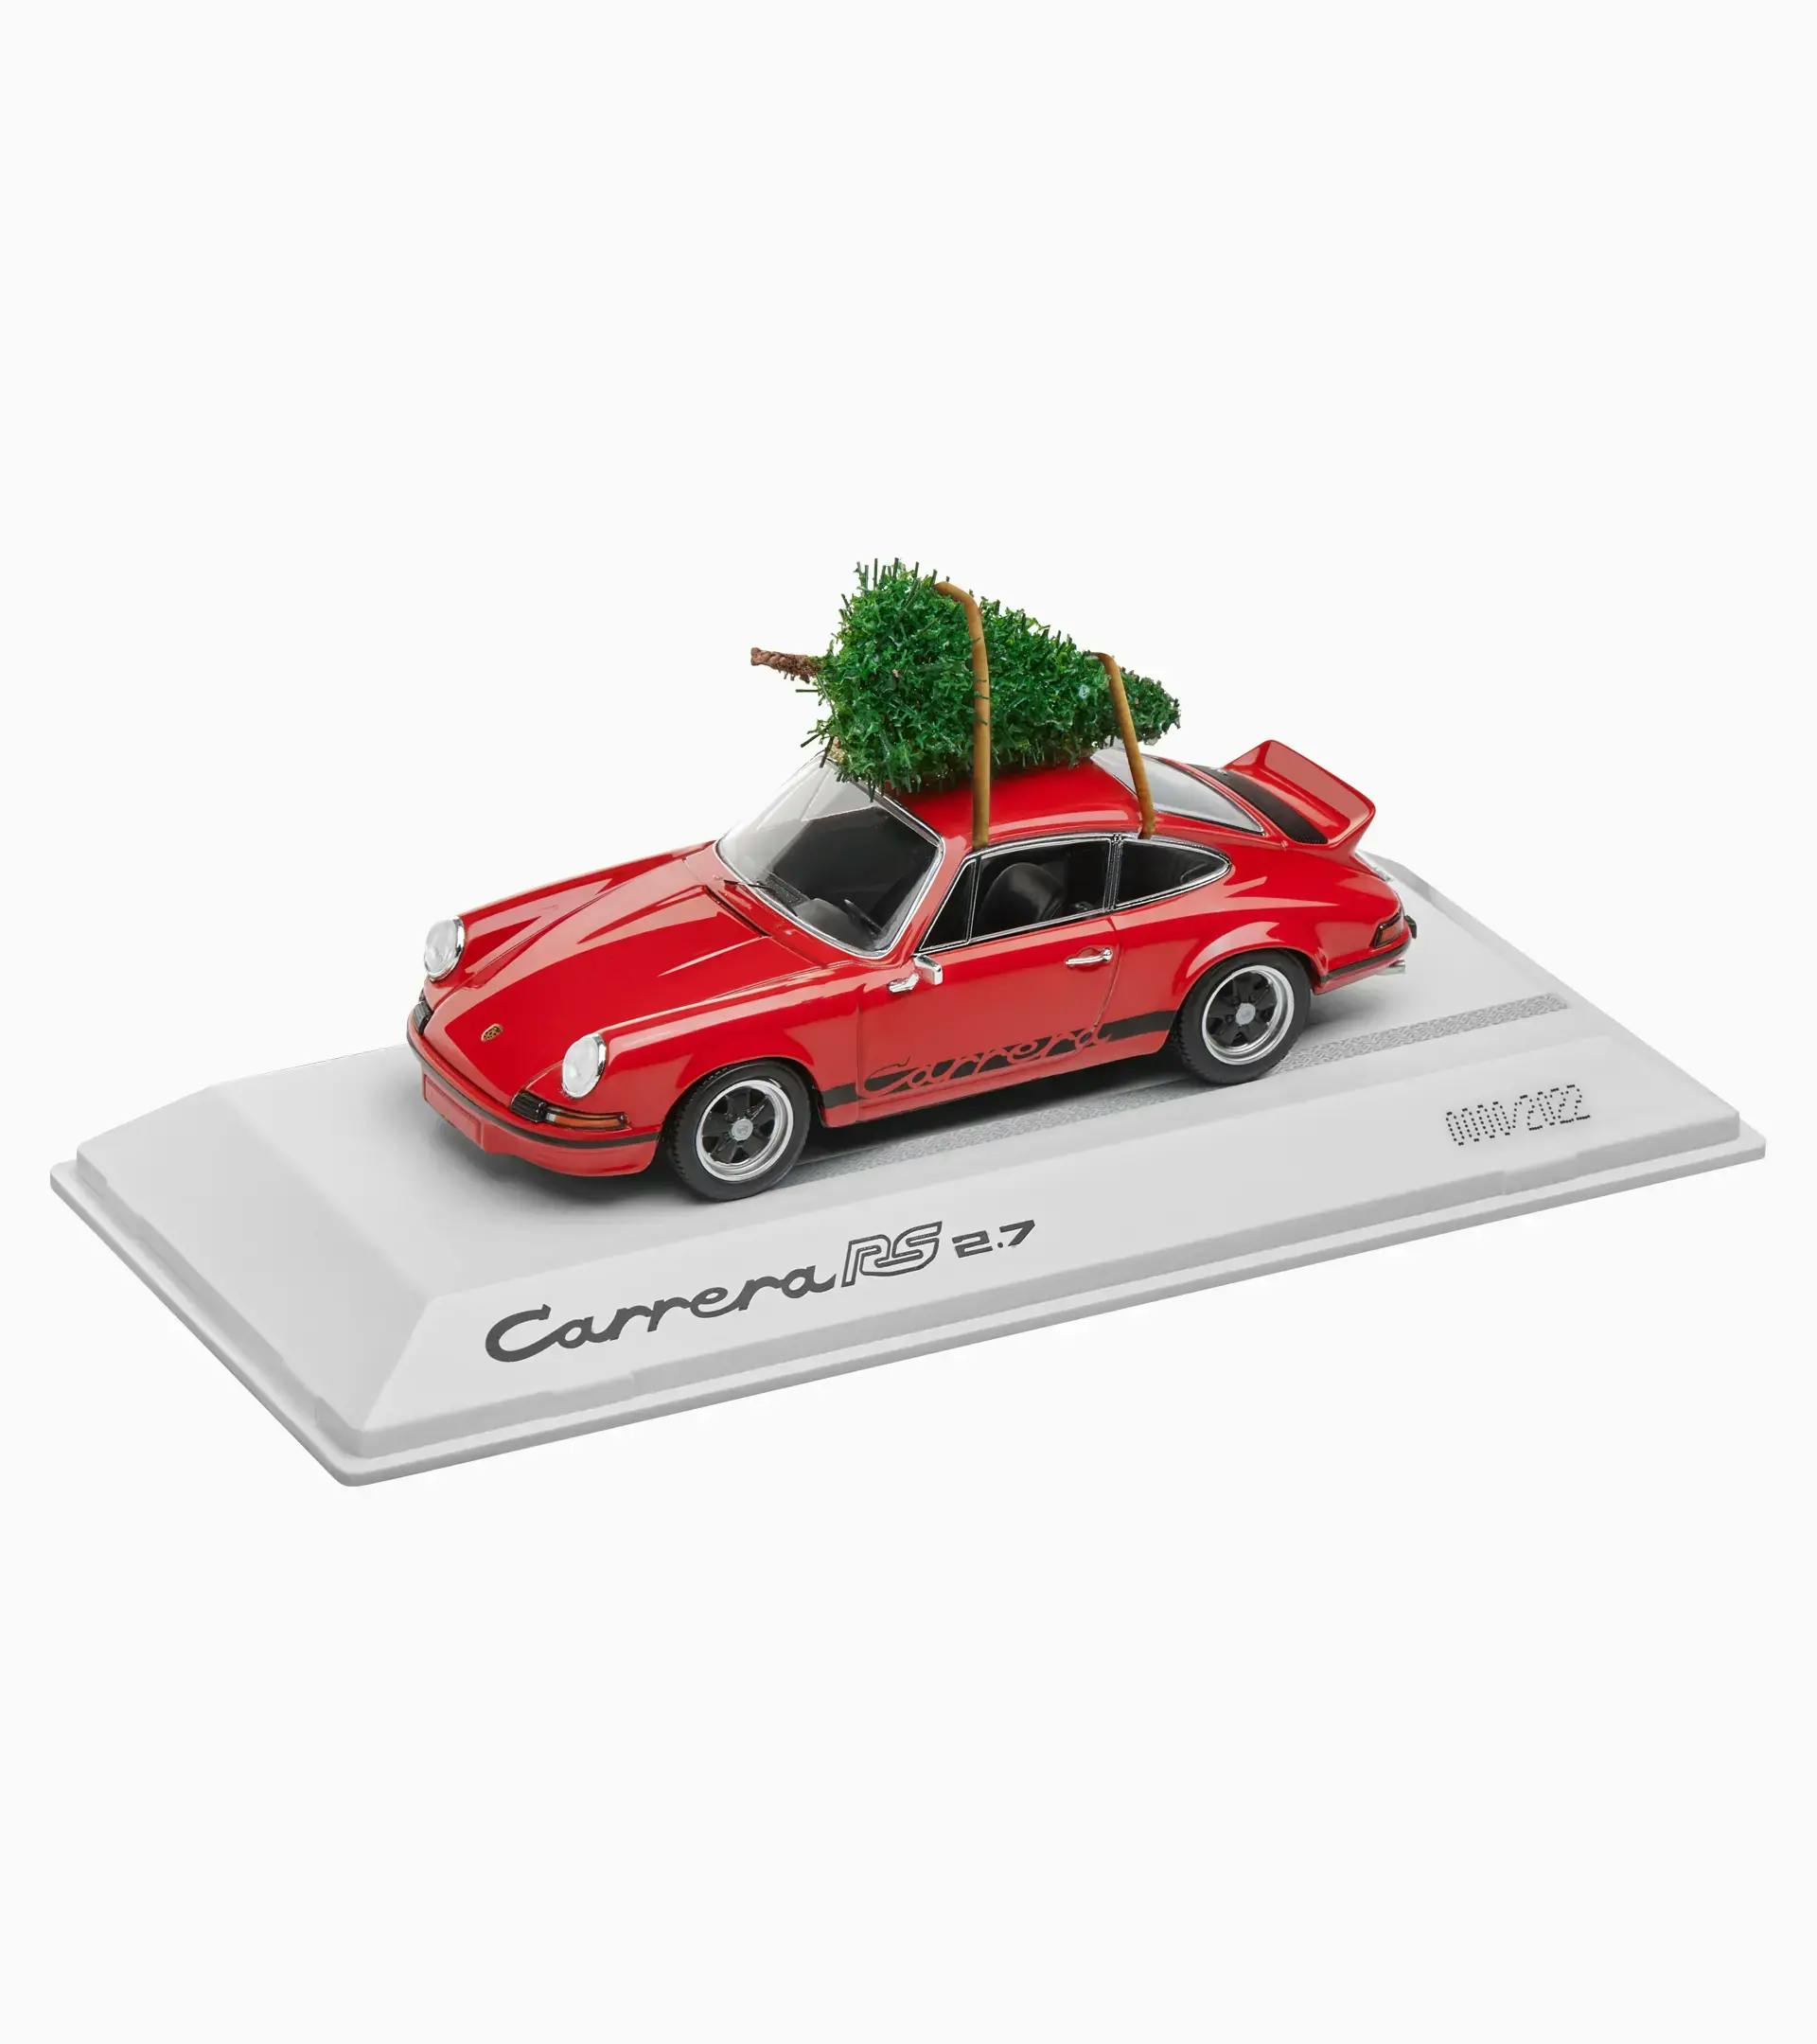 Porsche 911 Carrera RS  Christmas – Limited edition | PORSCHE SHOP